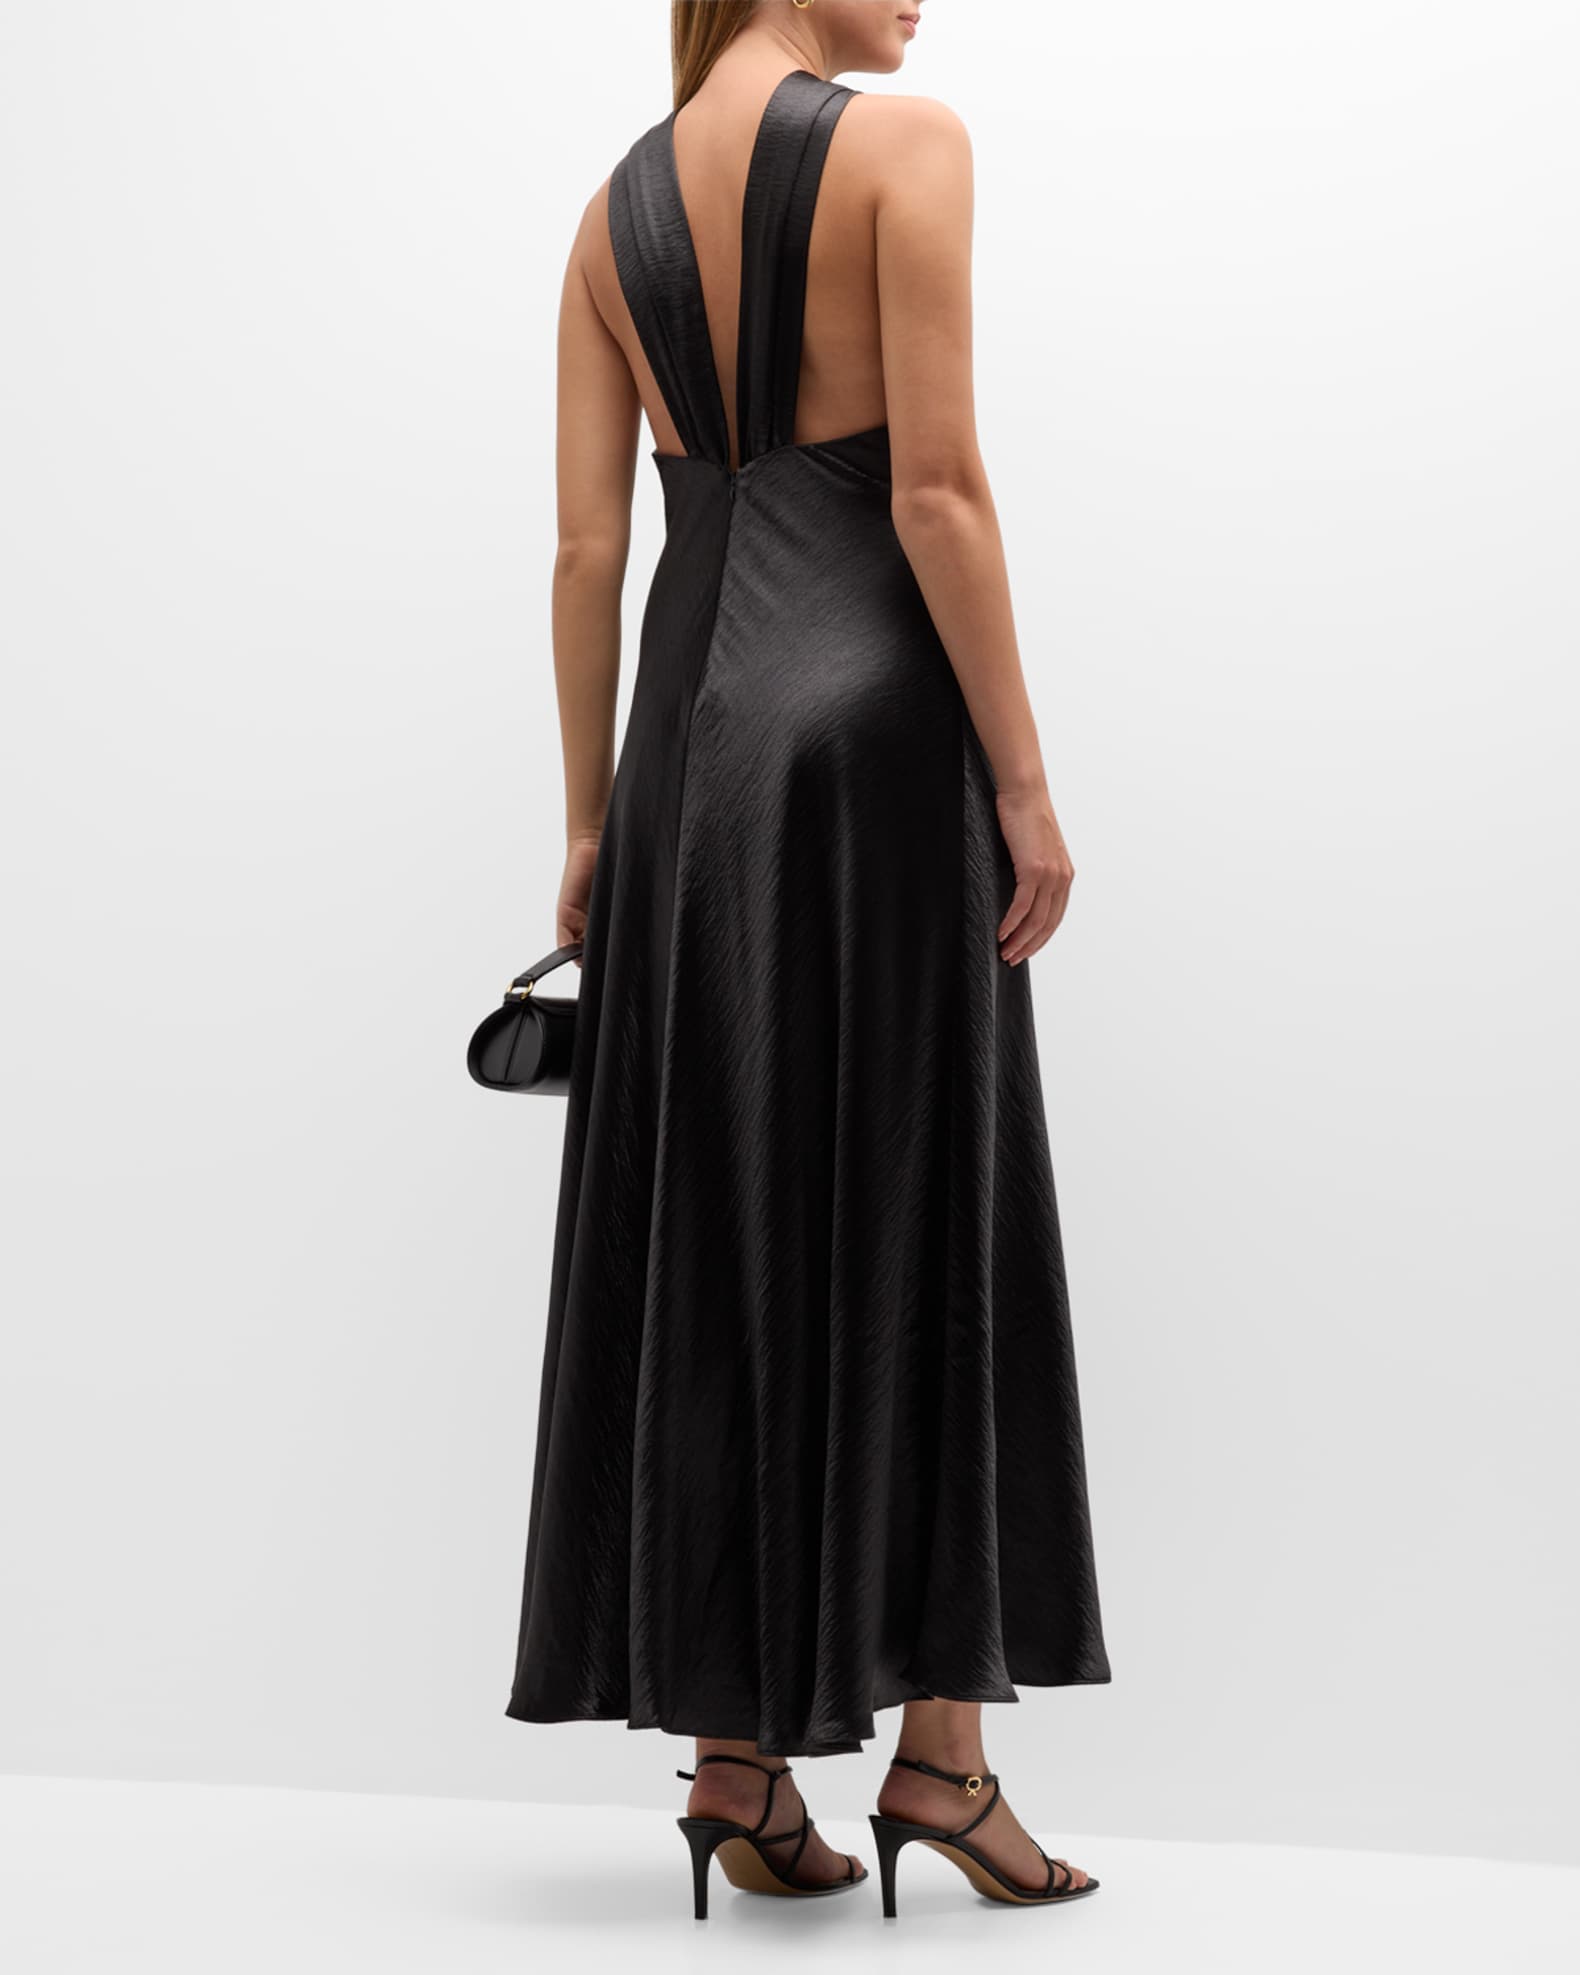 Tanya Taylor Mayanna Satin Halter Maxi Dress | Neiman Marcus